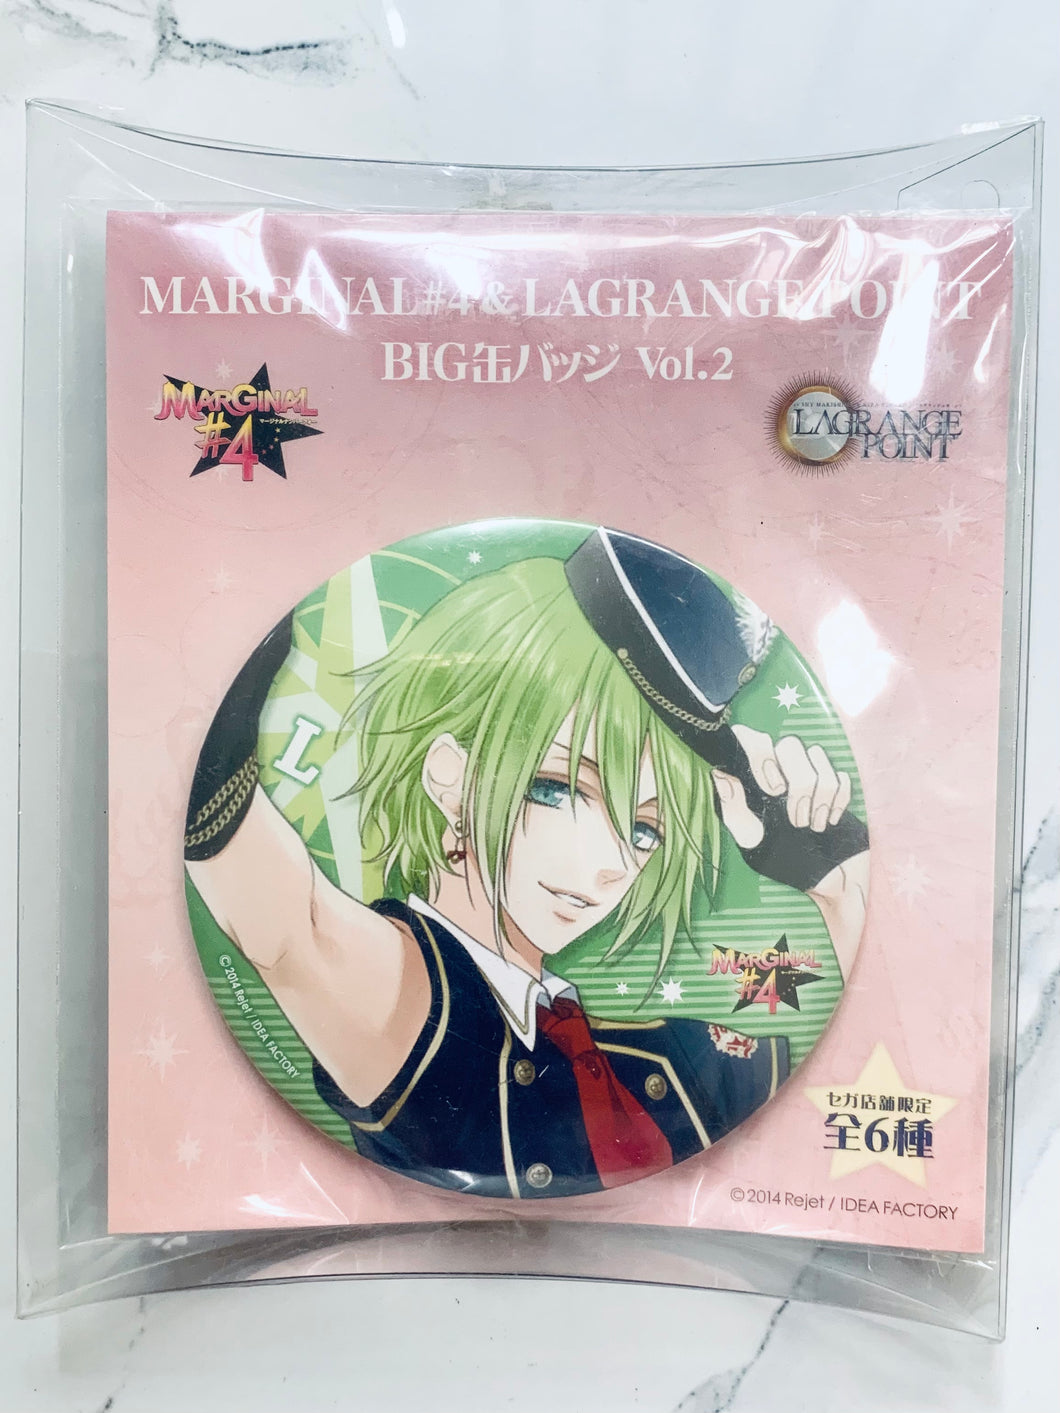 MARGINAL#4 - Nomura L - M#4 & Langrange Point Big Can Badge Vol. 2